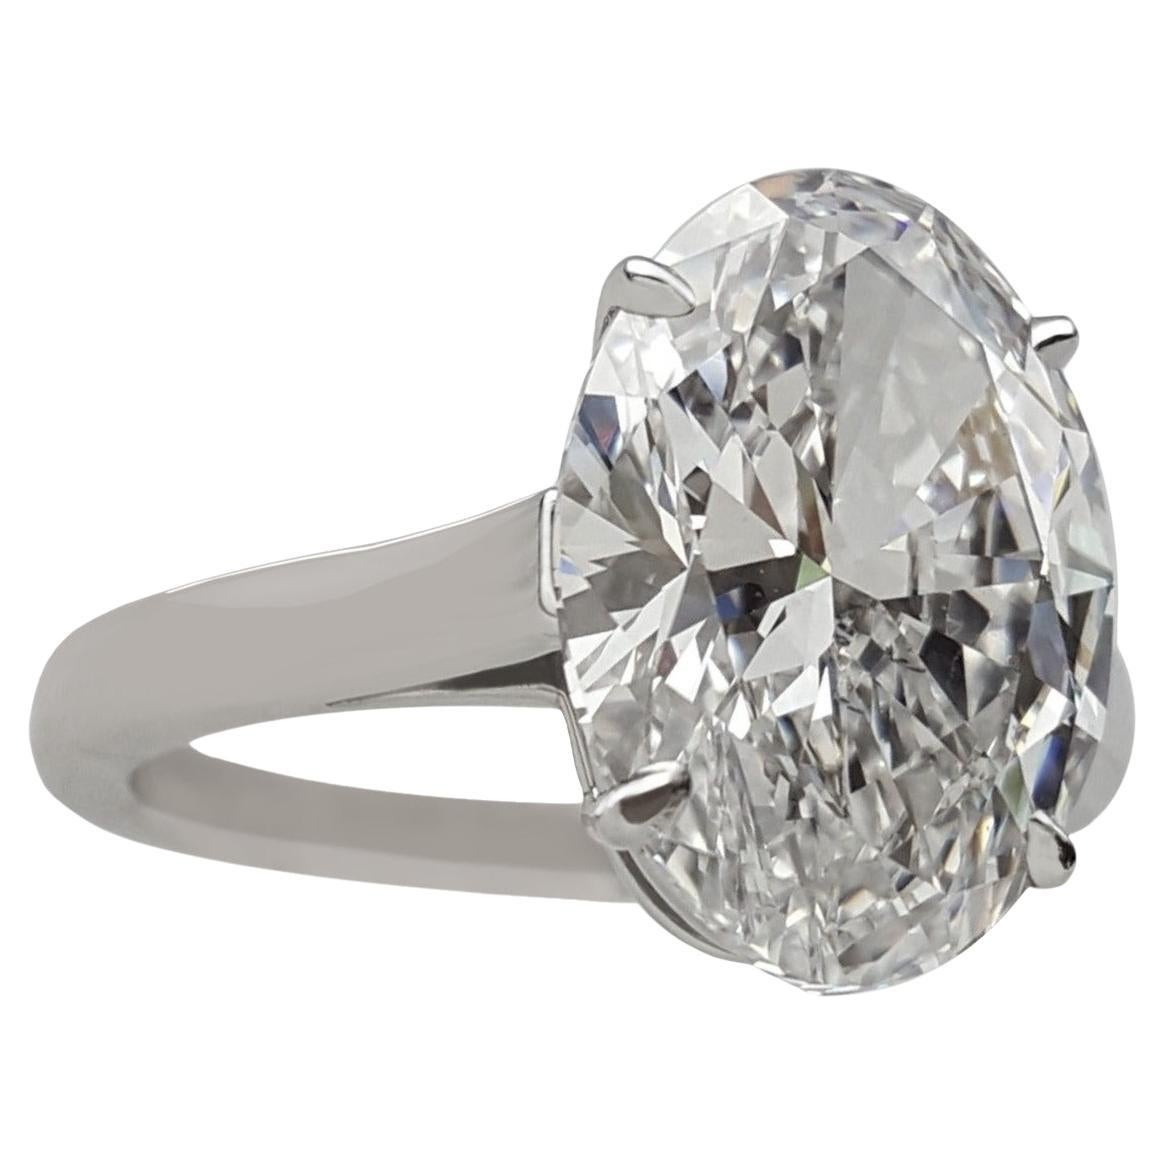 Tiffany & Co. 5 Carat Platinum Oval Cut Diamond Solitaire Engagement Ring. 